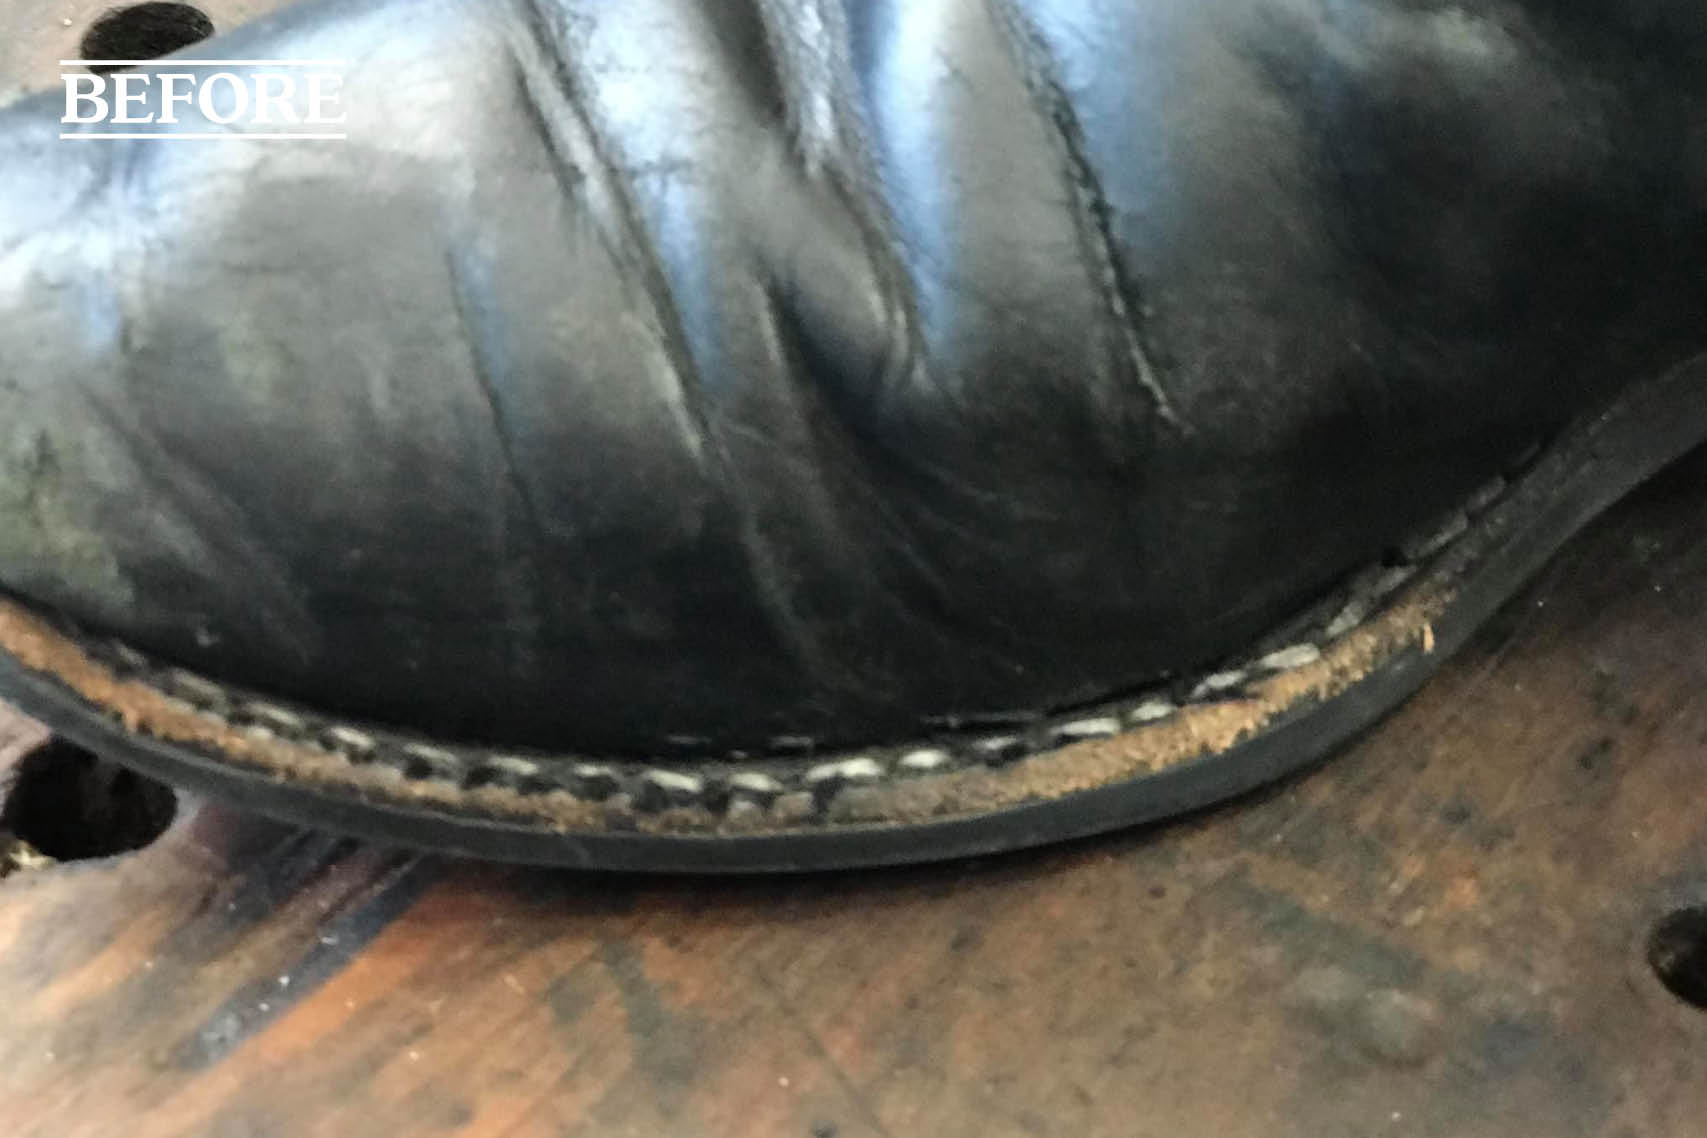 RM Williams rubber sole